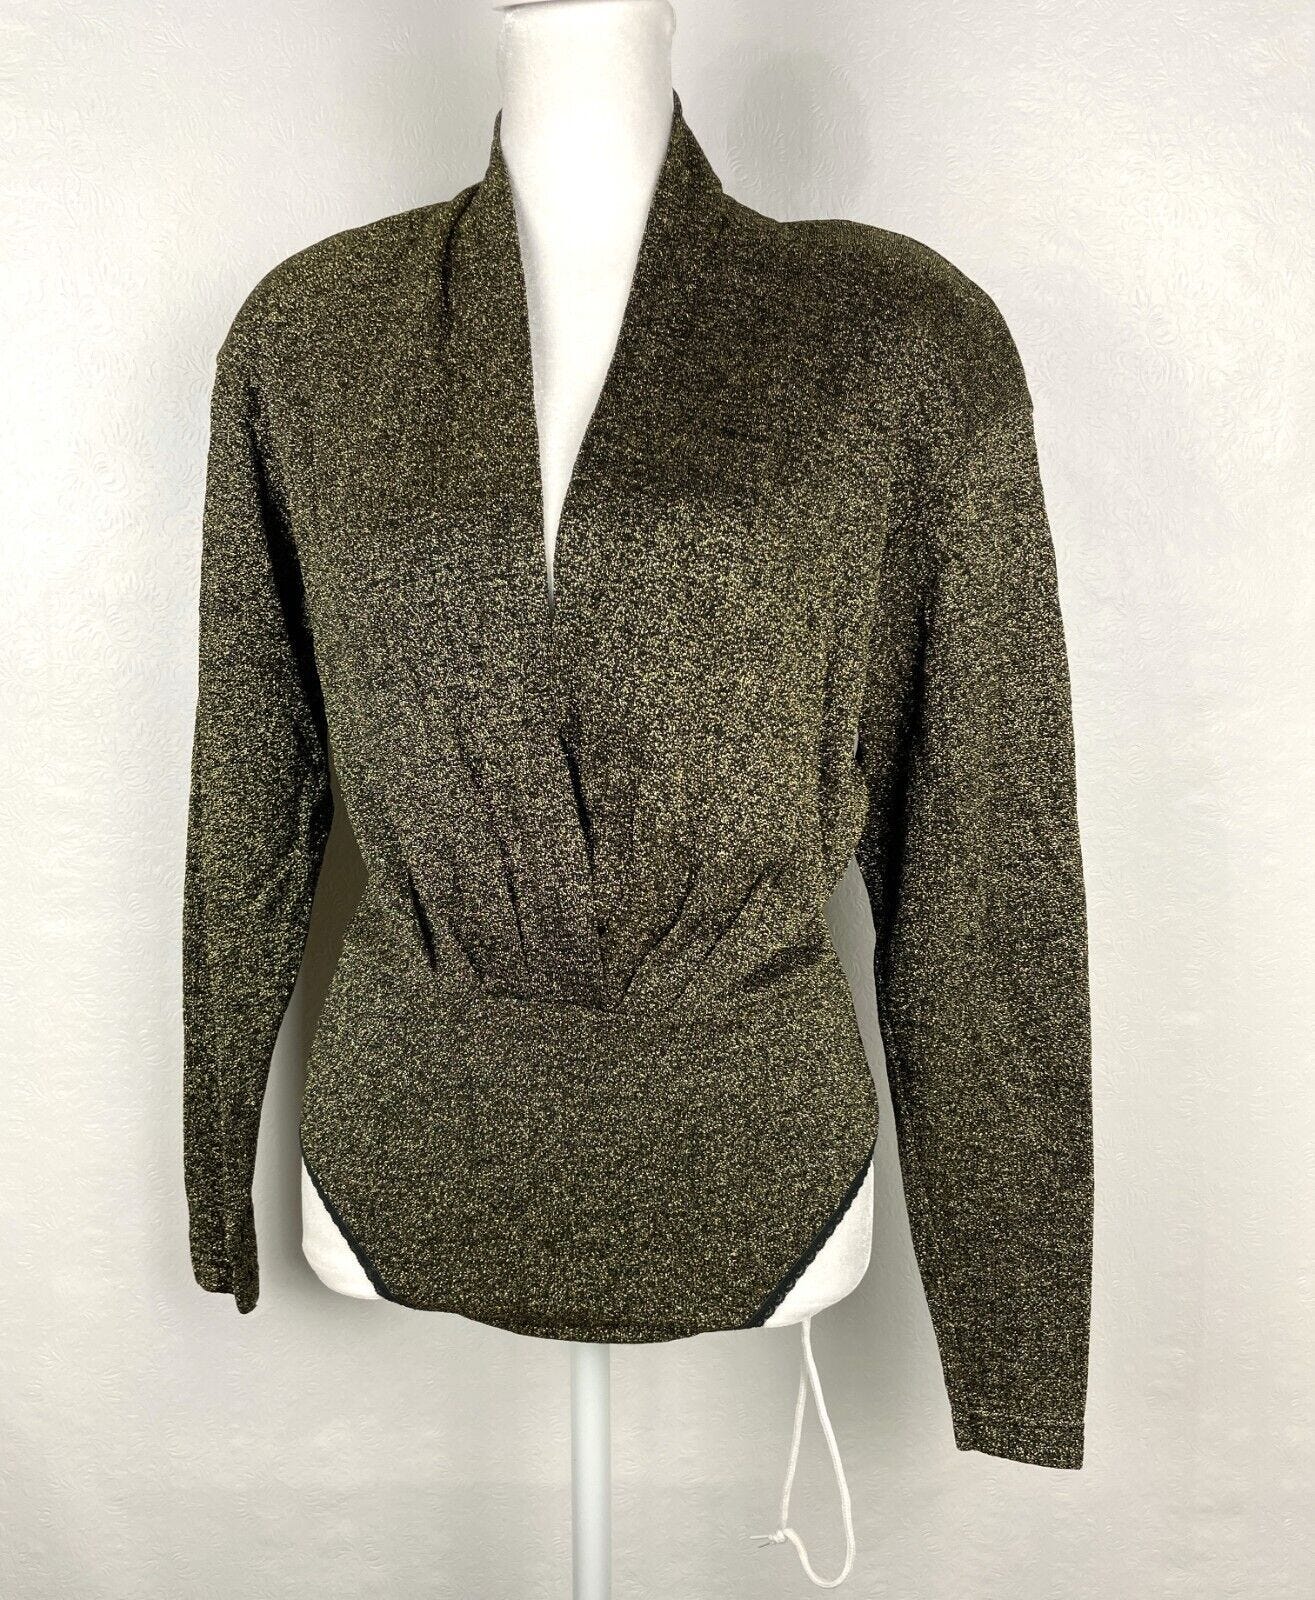 Vintage 80s 90s Ann Tjian for Kenar Gold Metallic Bodysuit Wrap Blouse Top Sz S - Picture 1 of 5